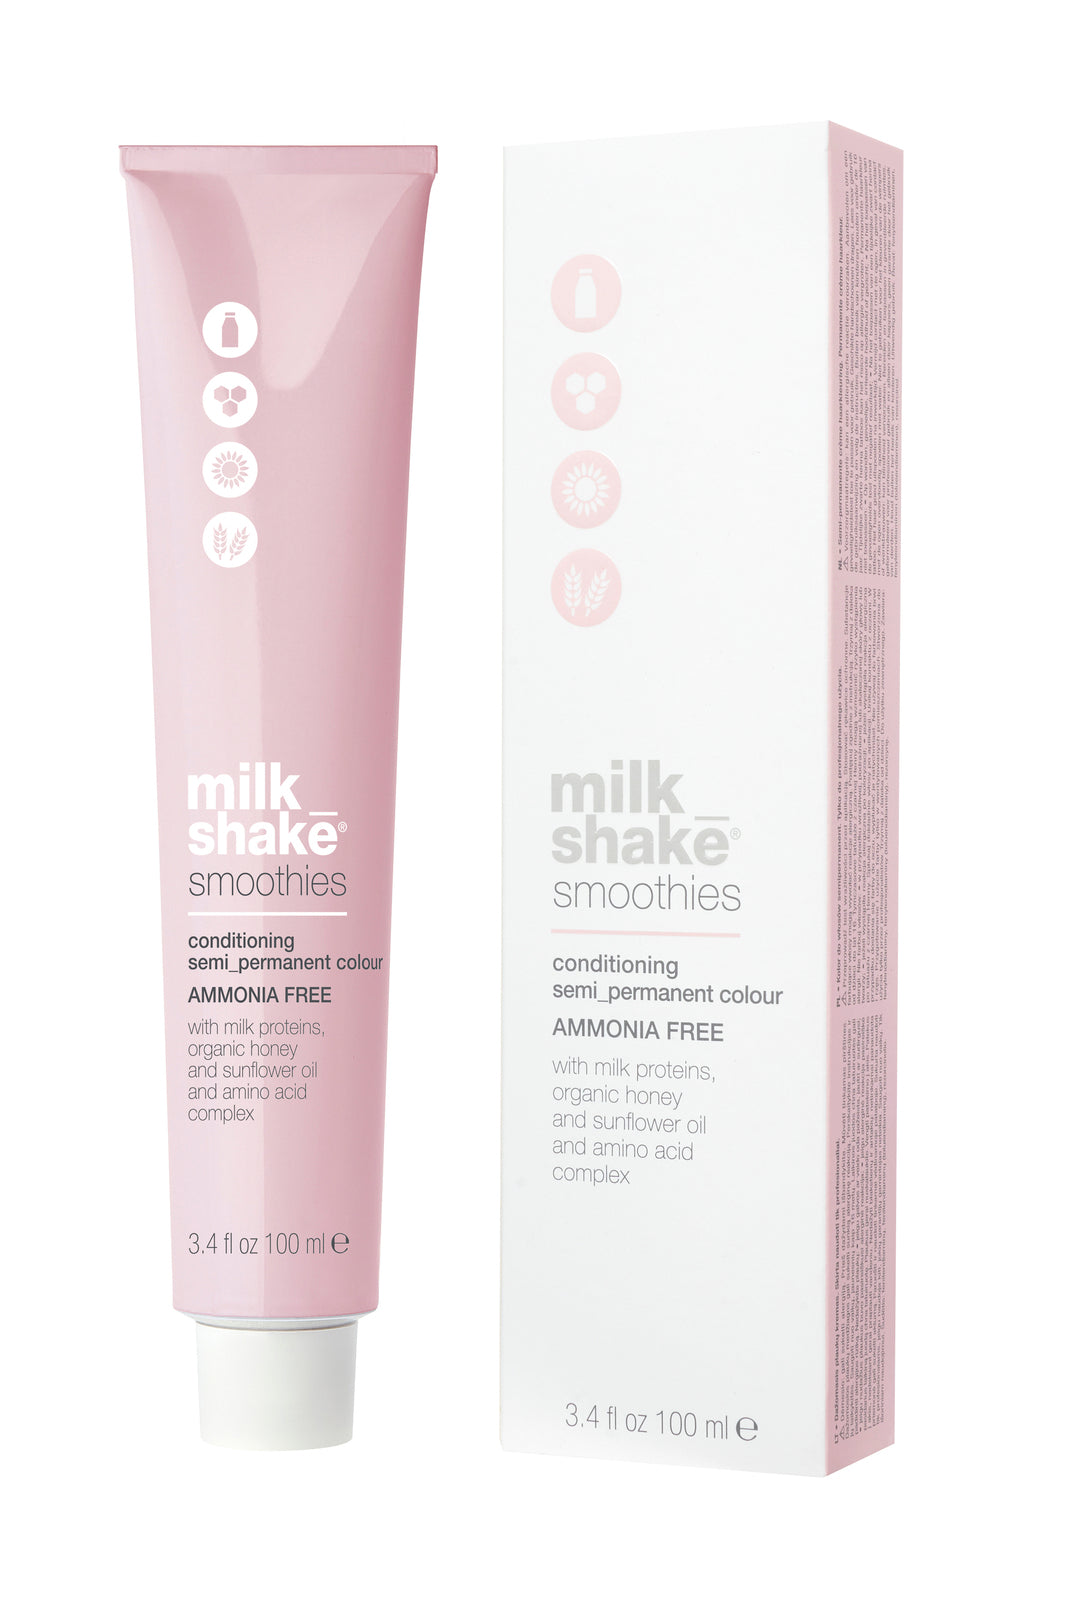 Milkshake smoothies semi-permanent color 8